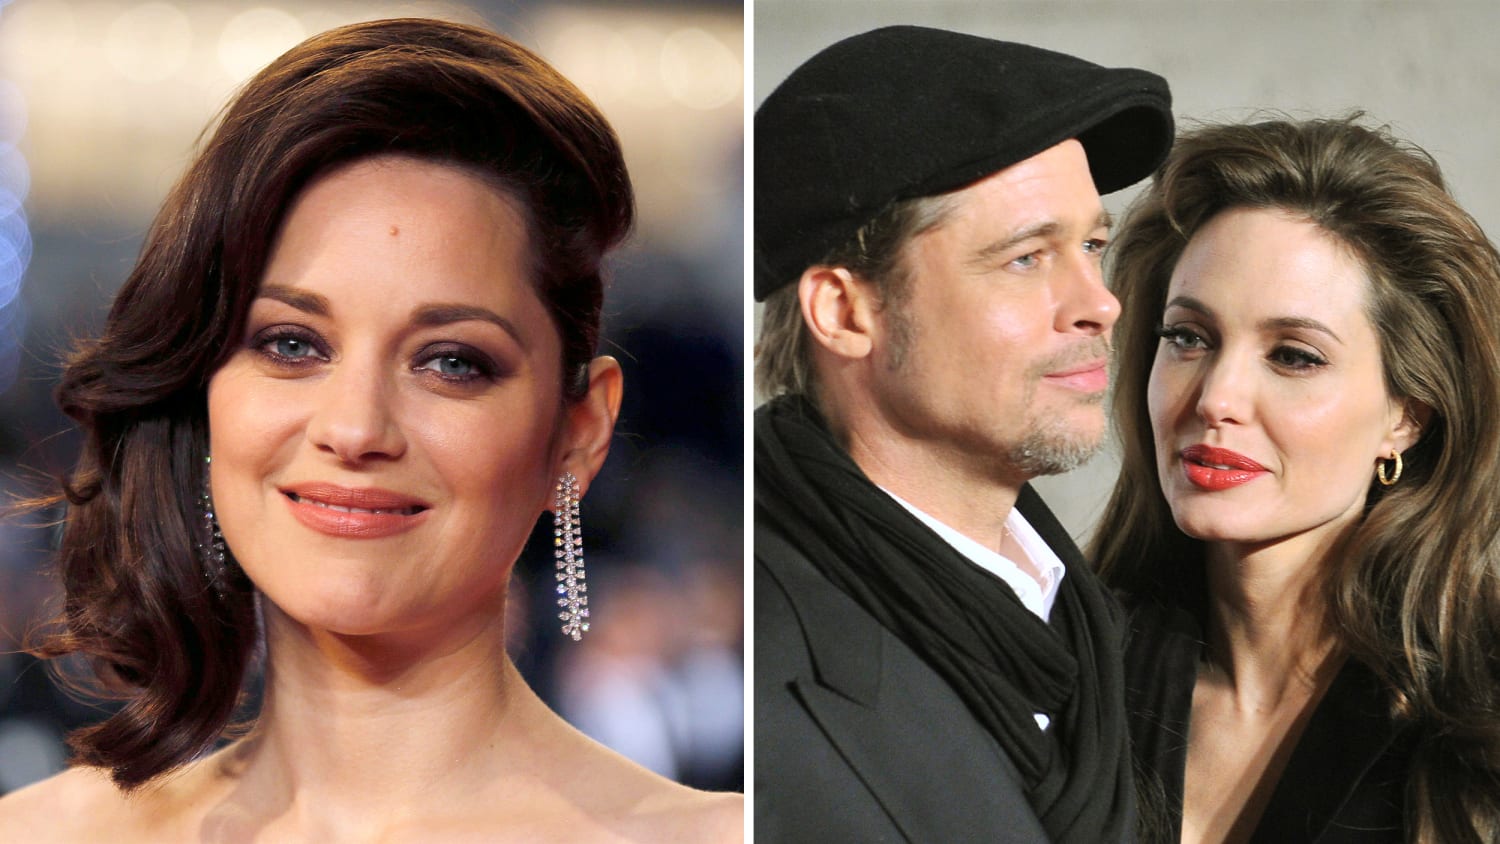 Marion Cotillard addresses Brad Pitt affair rumors, wishes Pitt, Angelina Jolie 'peace ...